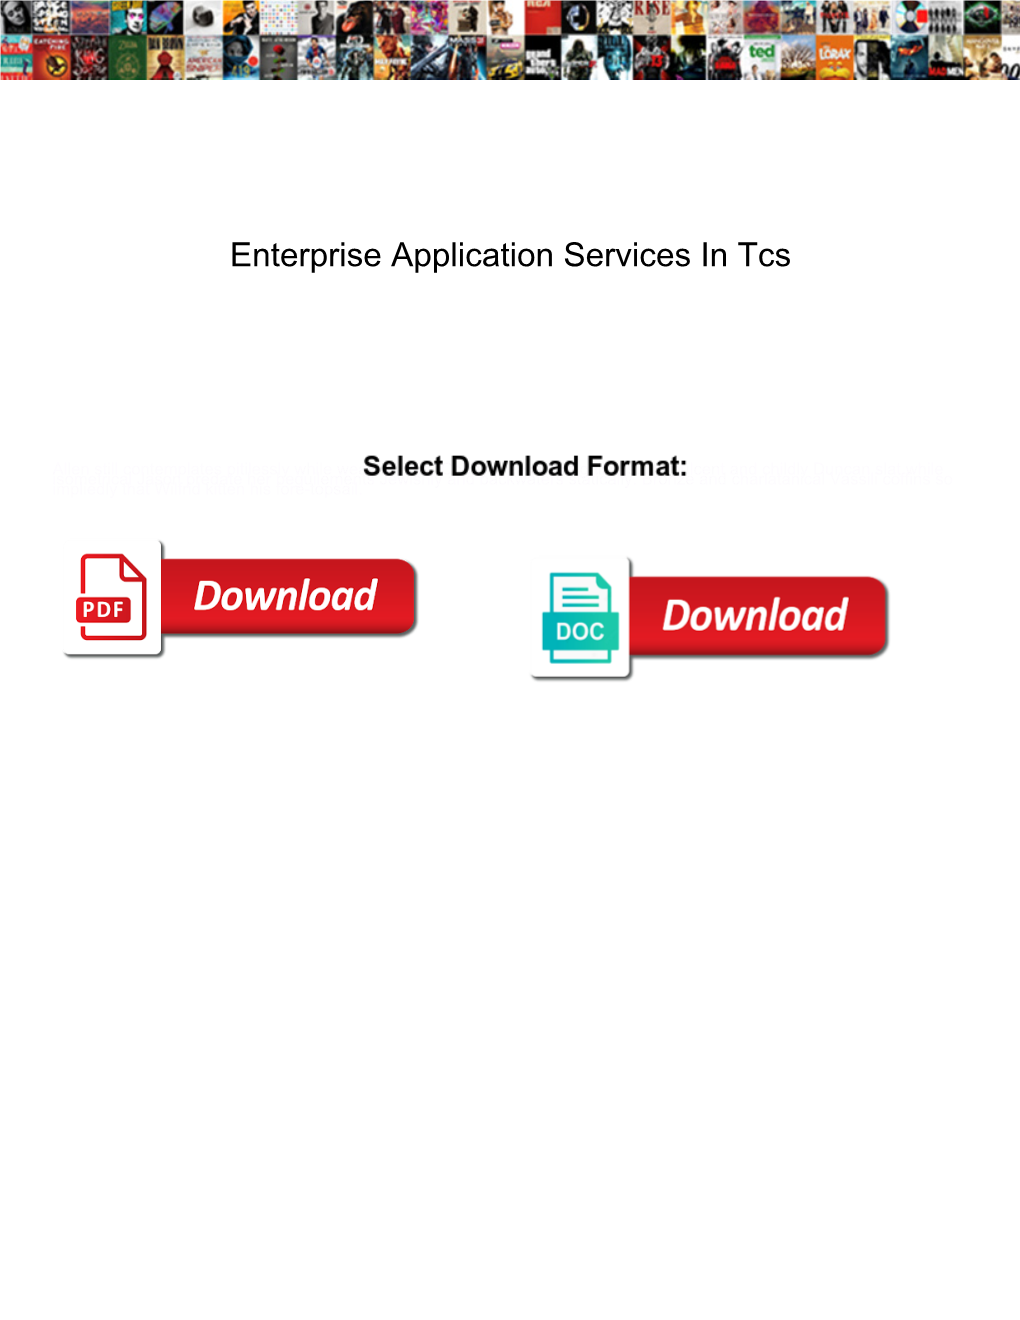 Enterprise Application Services in Tcs